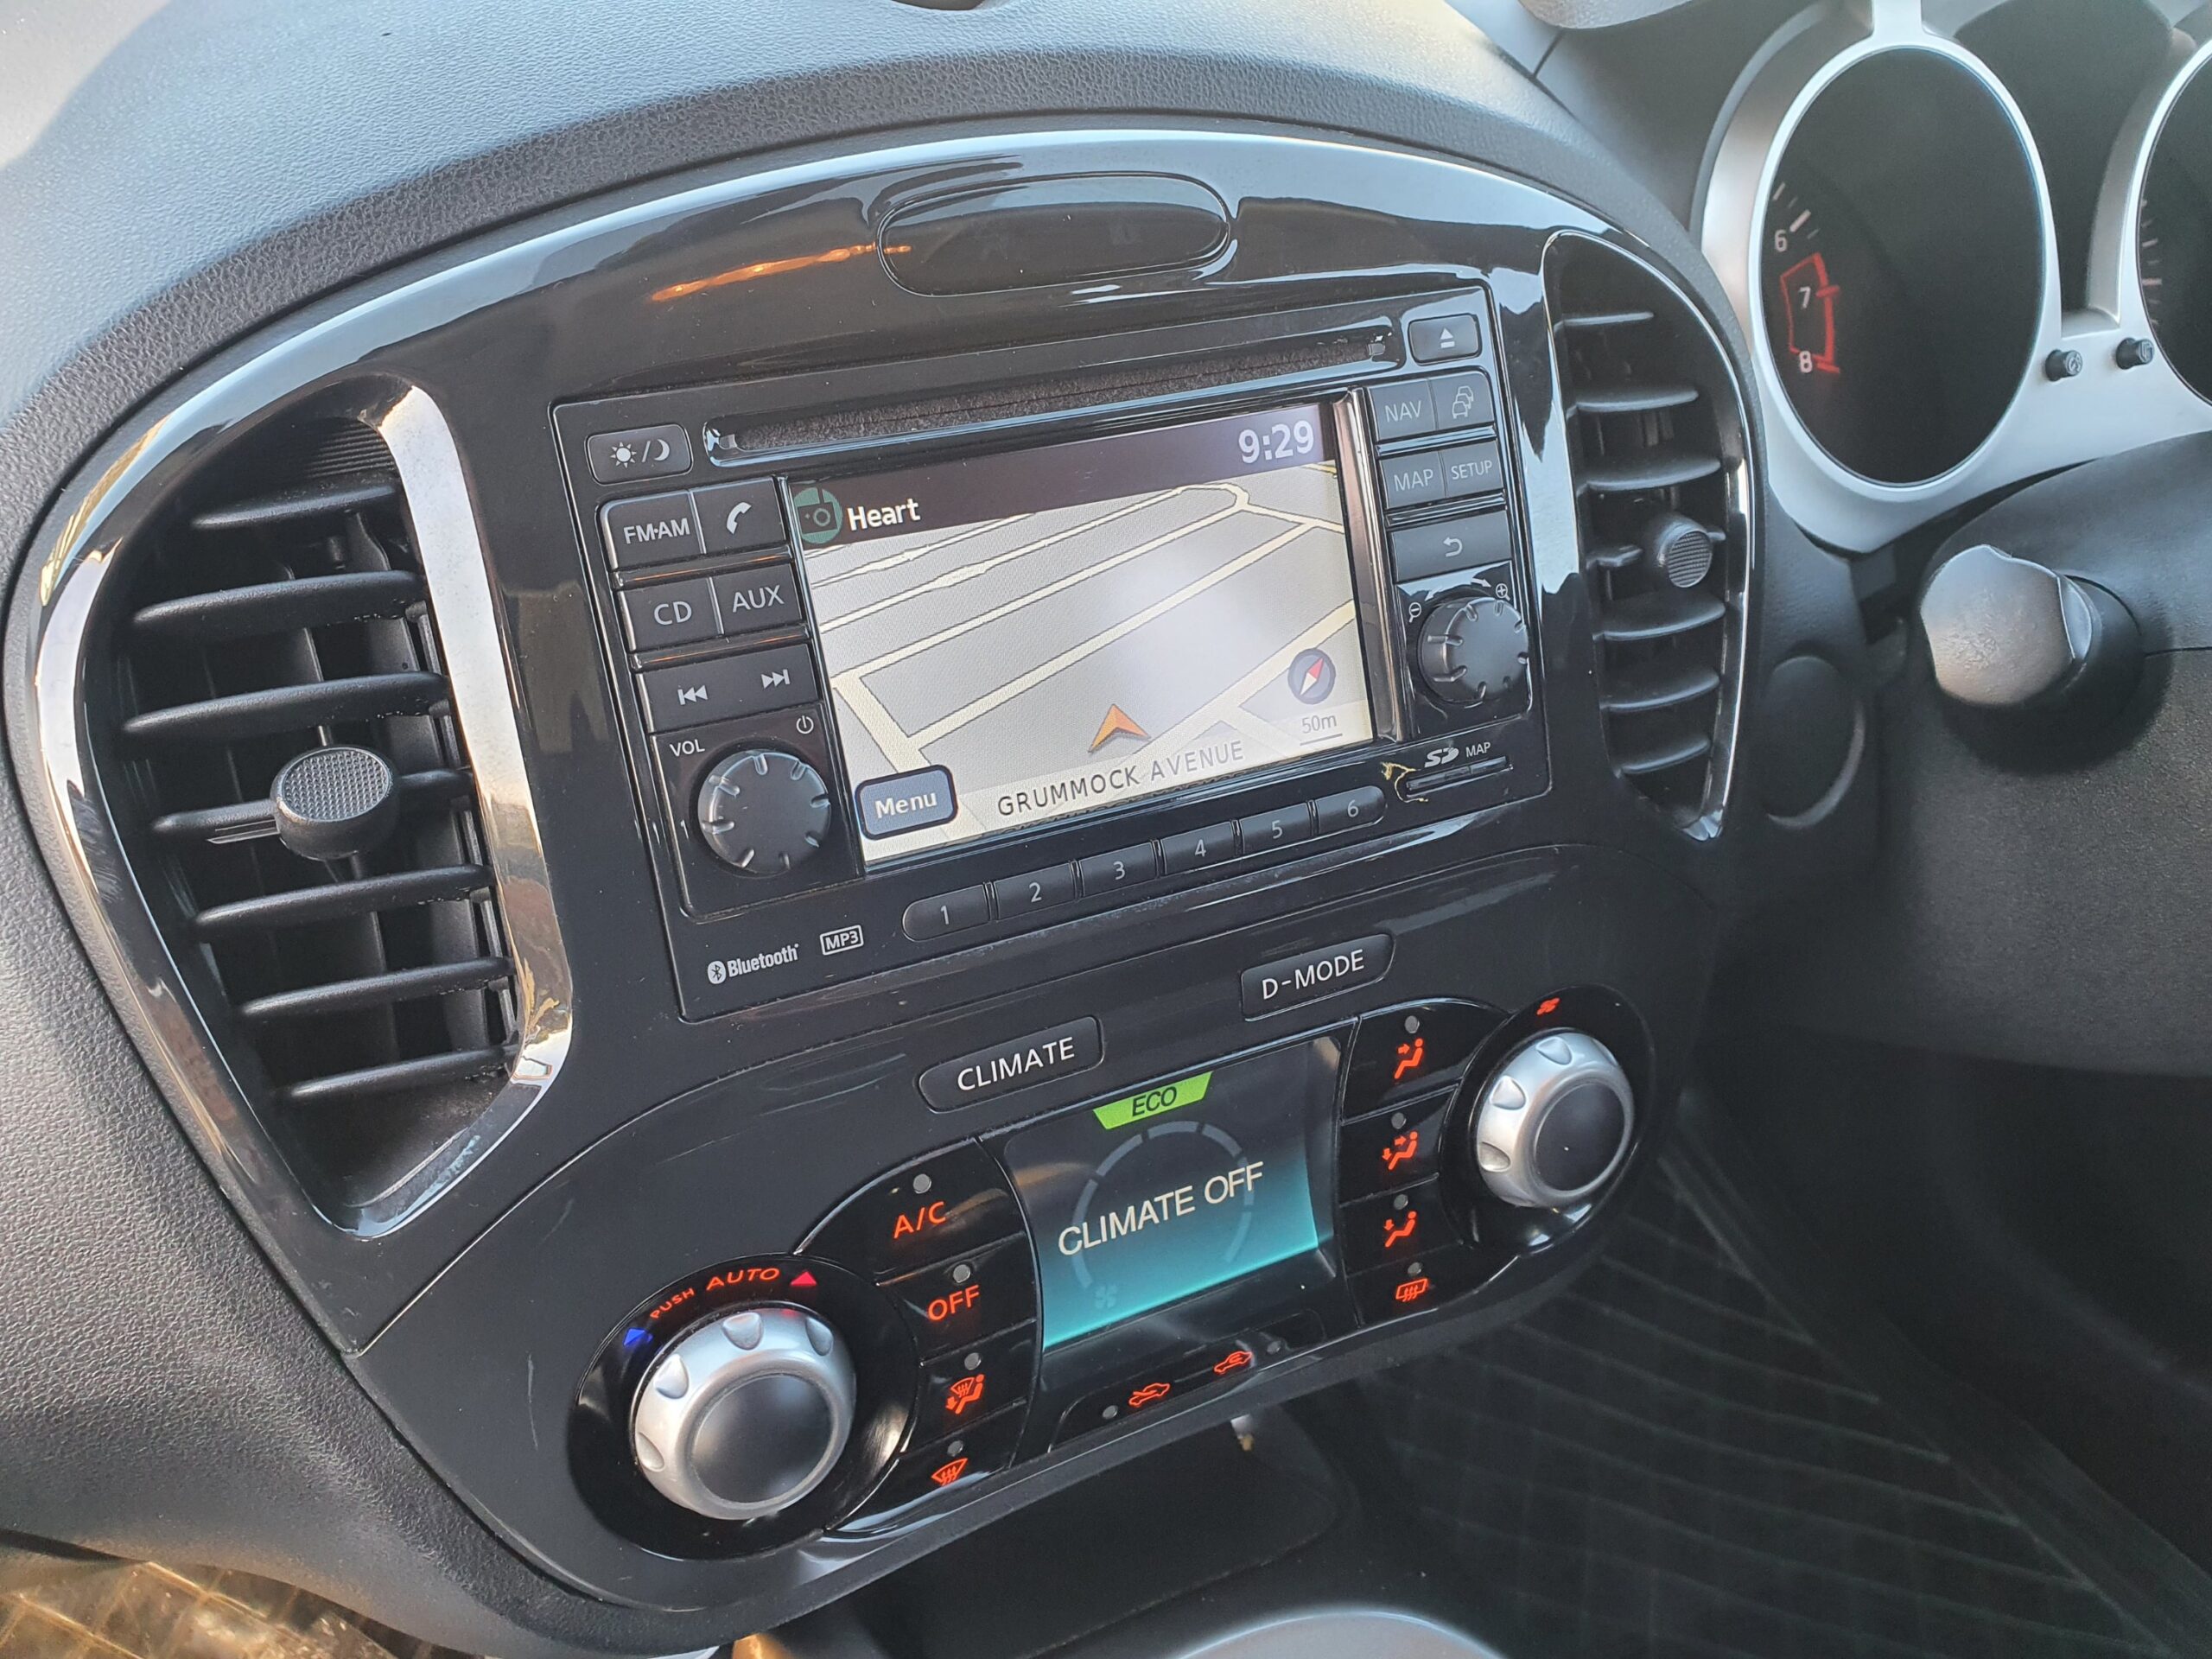 Radio swap, customer supplied sat nav radio swap in a